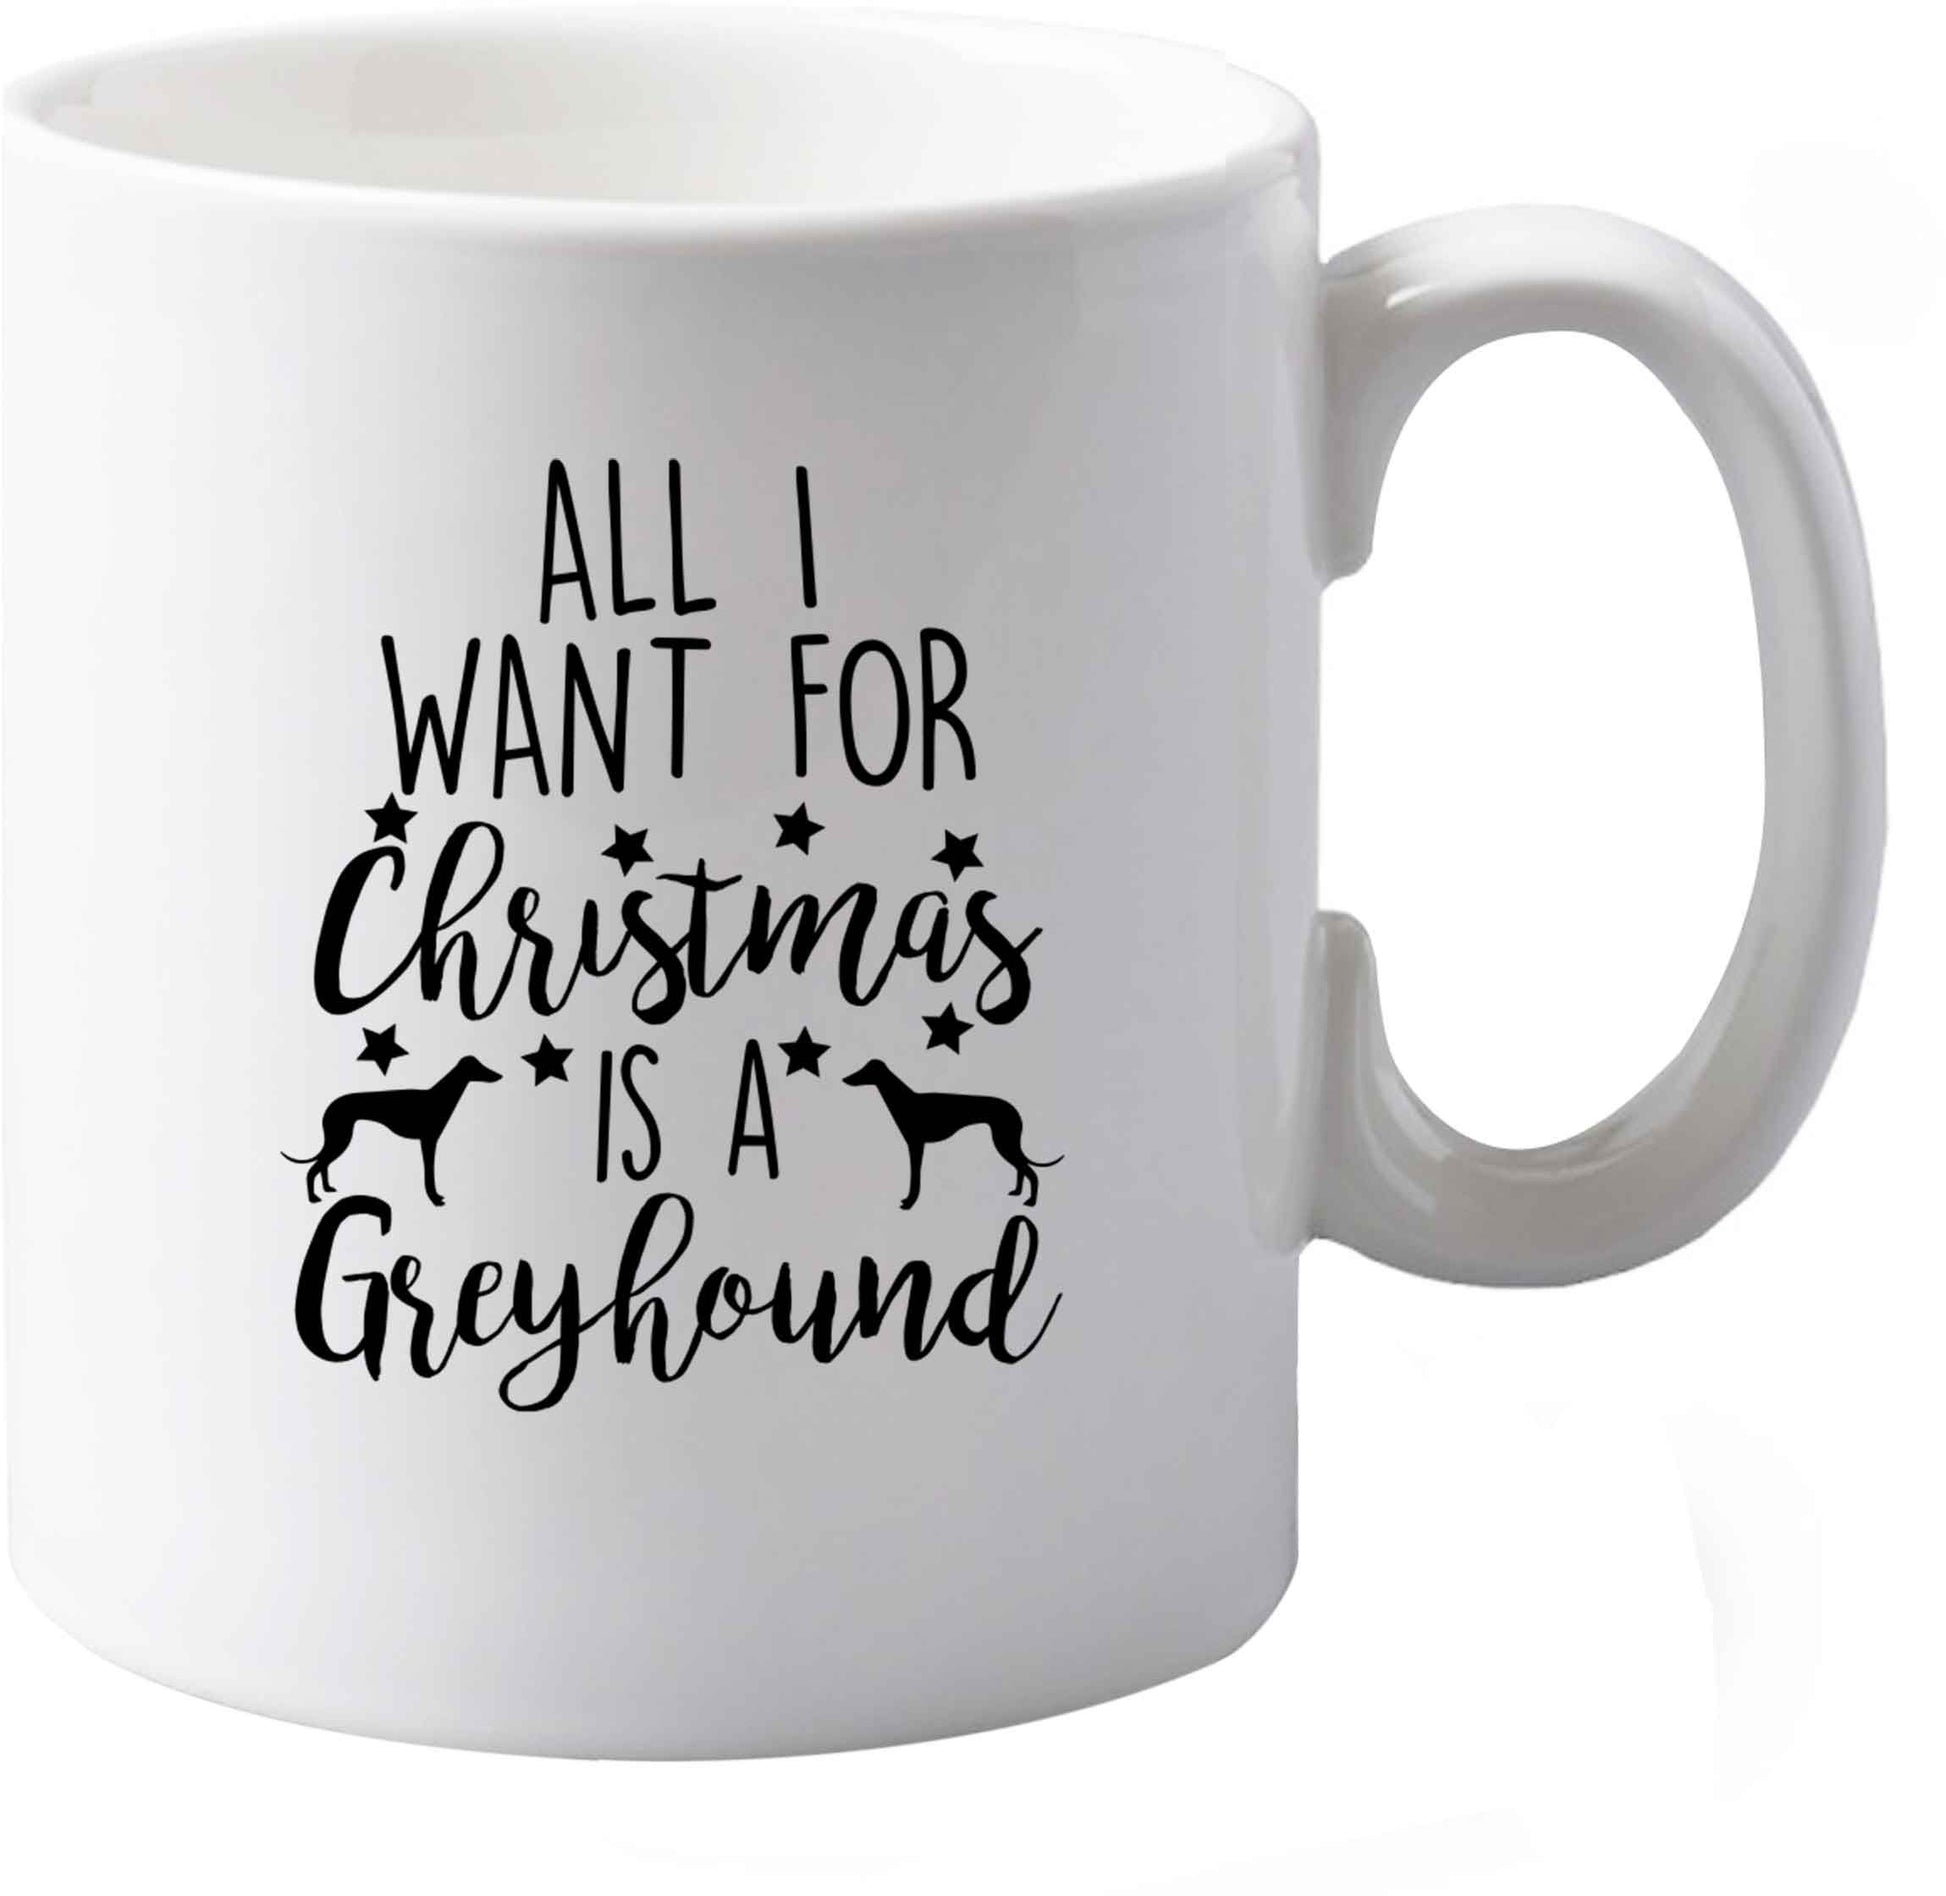 10 oz All I want for Christmas is a greyhound ceramic mug both sides